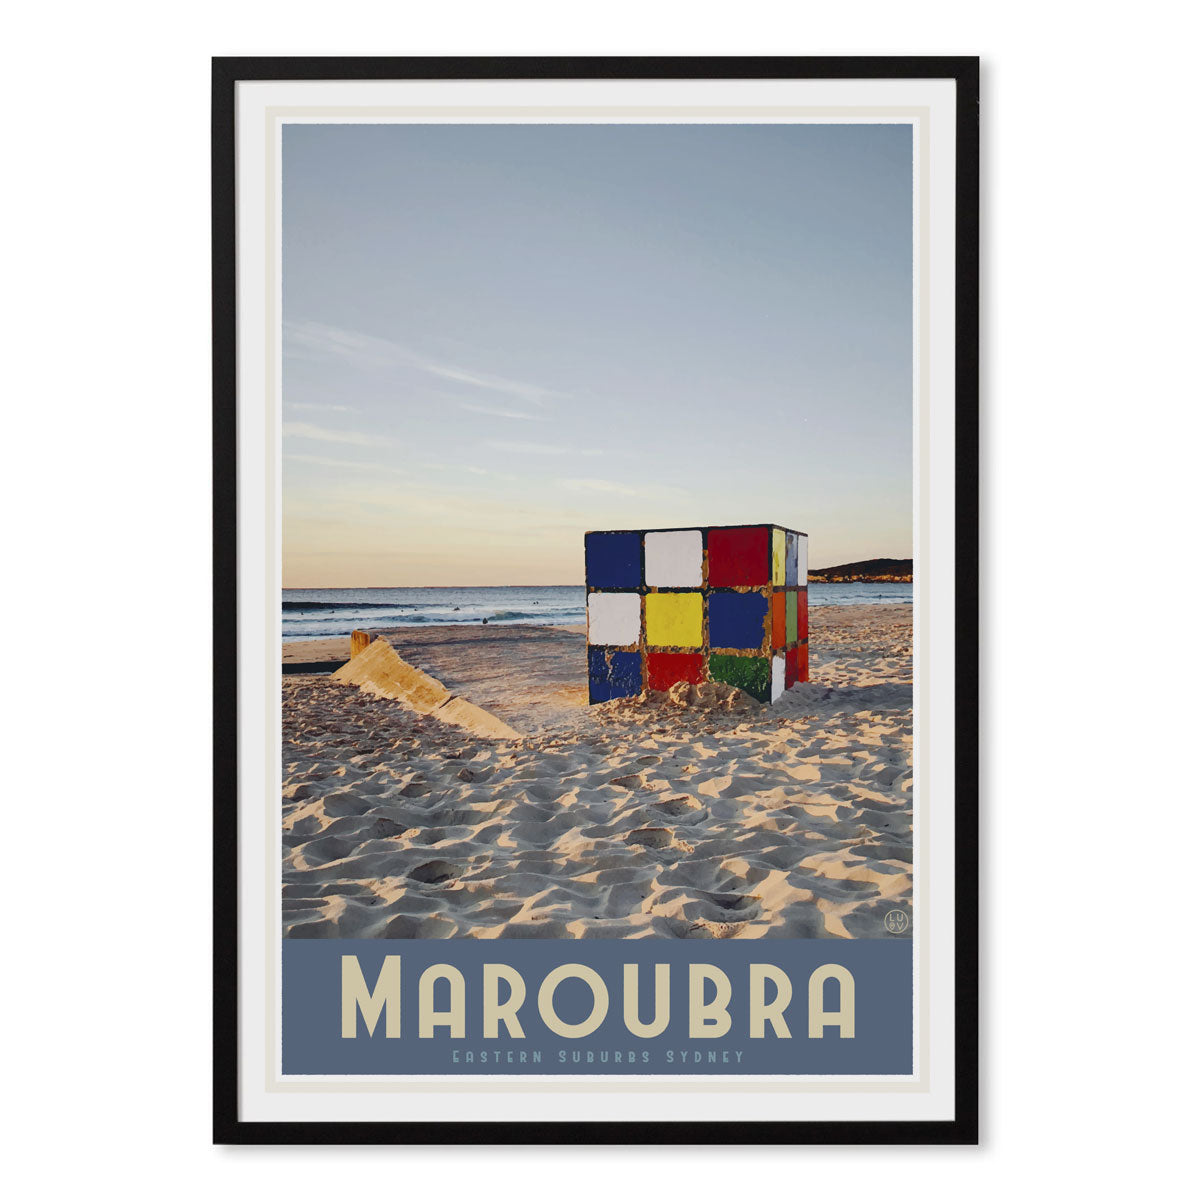 Maroubra cube vintage style black framed travel print by places we luv